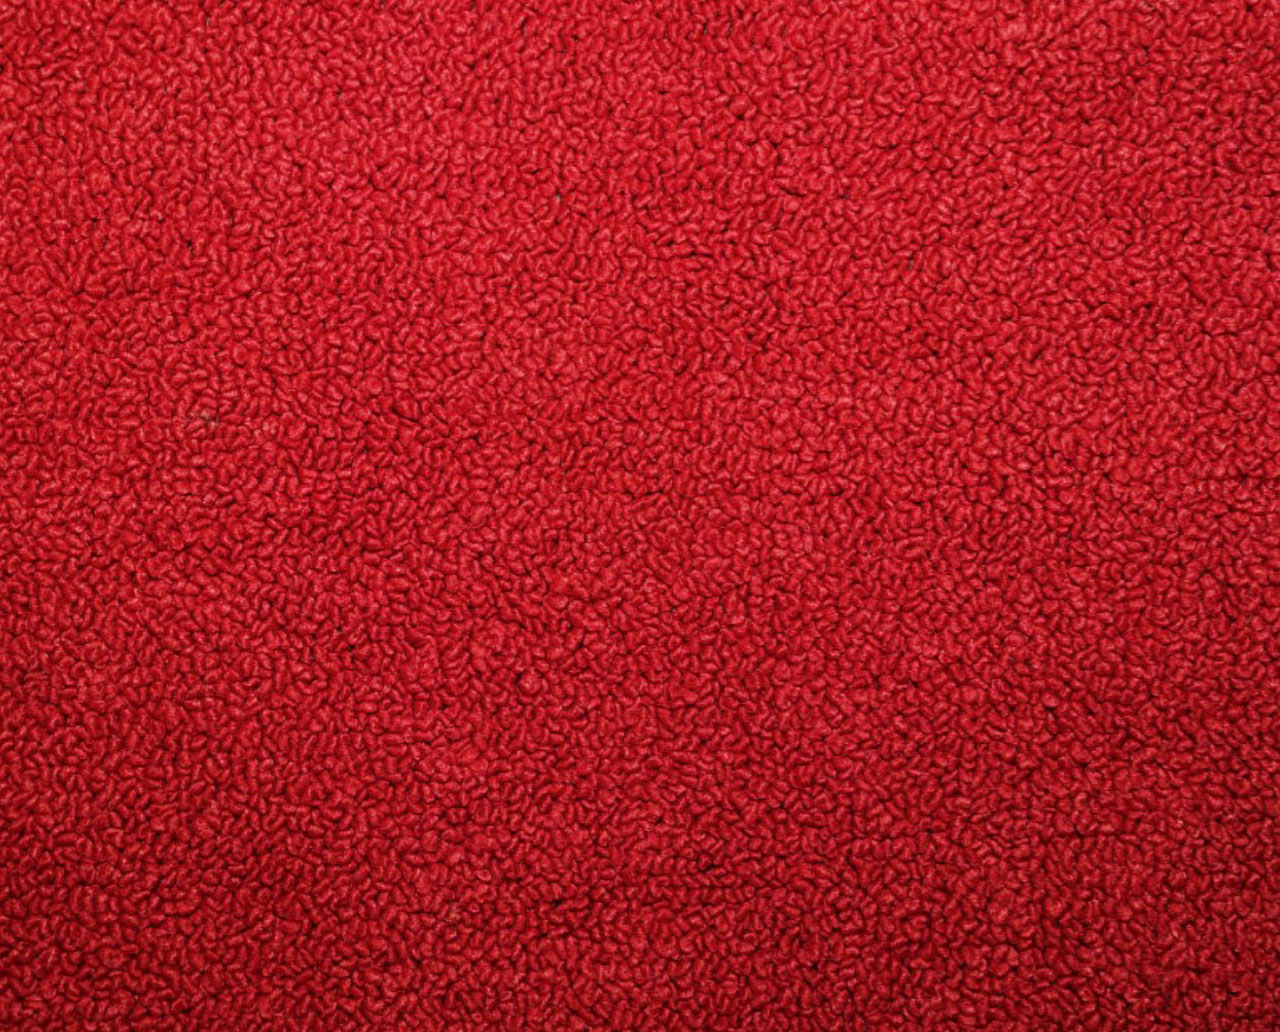 Holden Kingswood HG Kingswood Wagon 12E Baroque Red Carpet (Image 1 of 1)